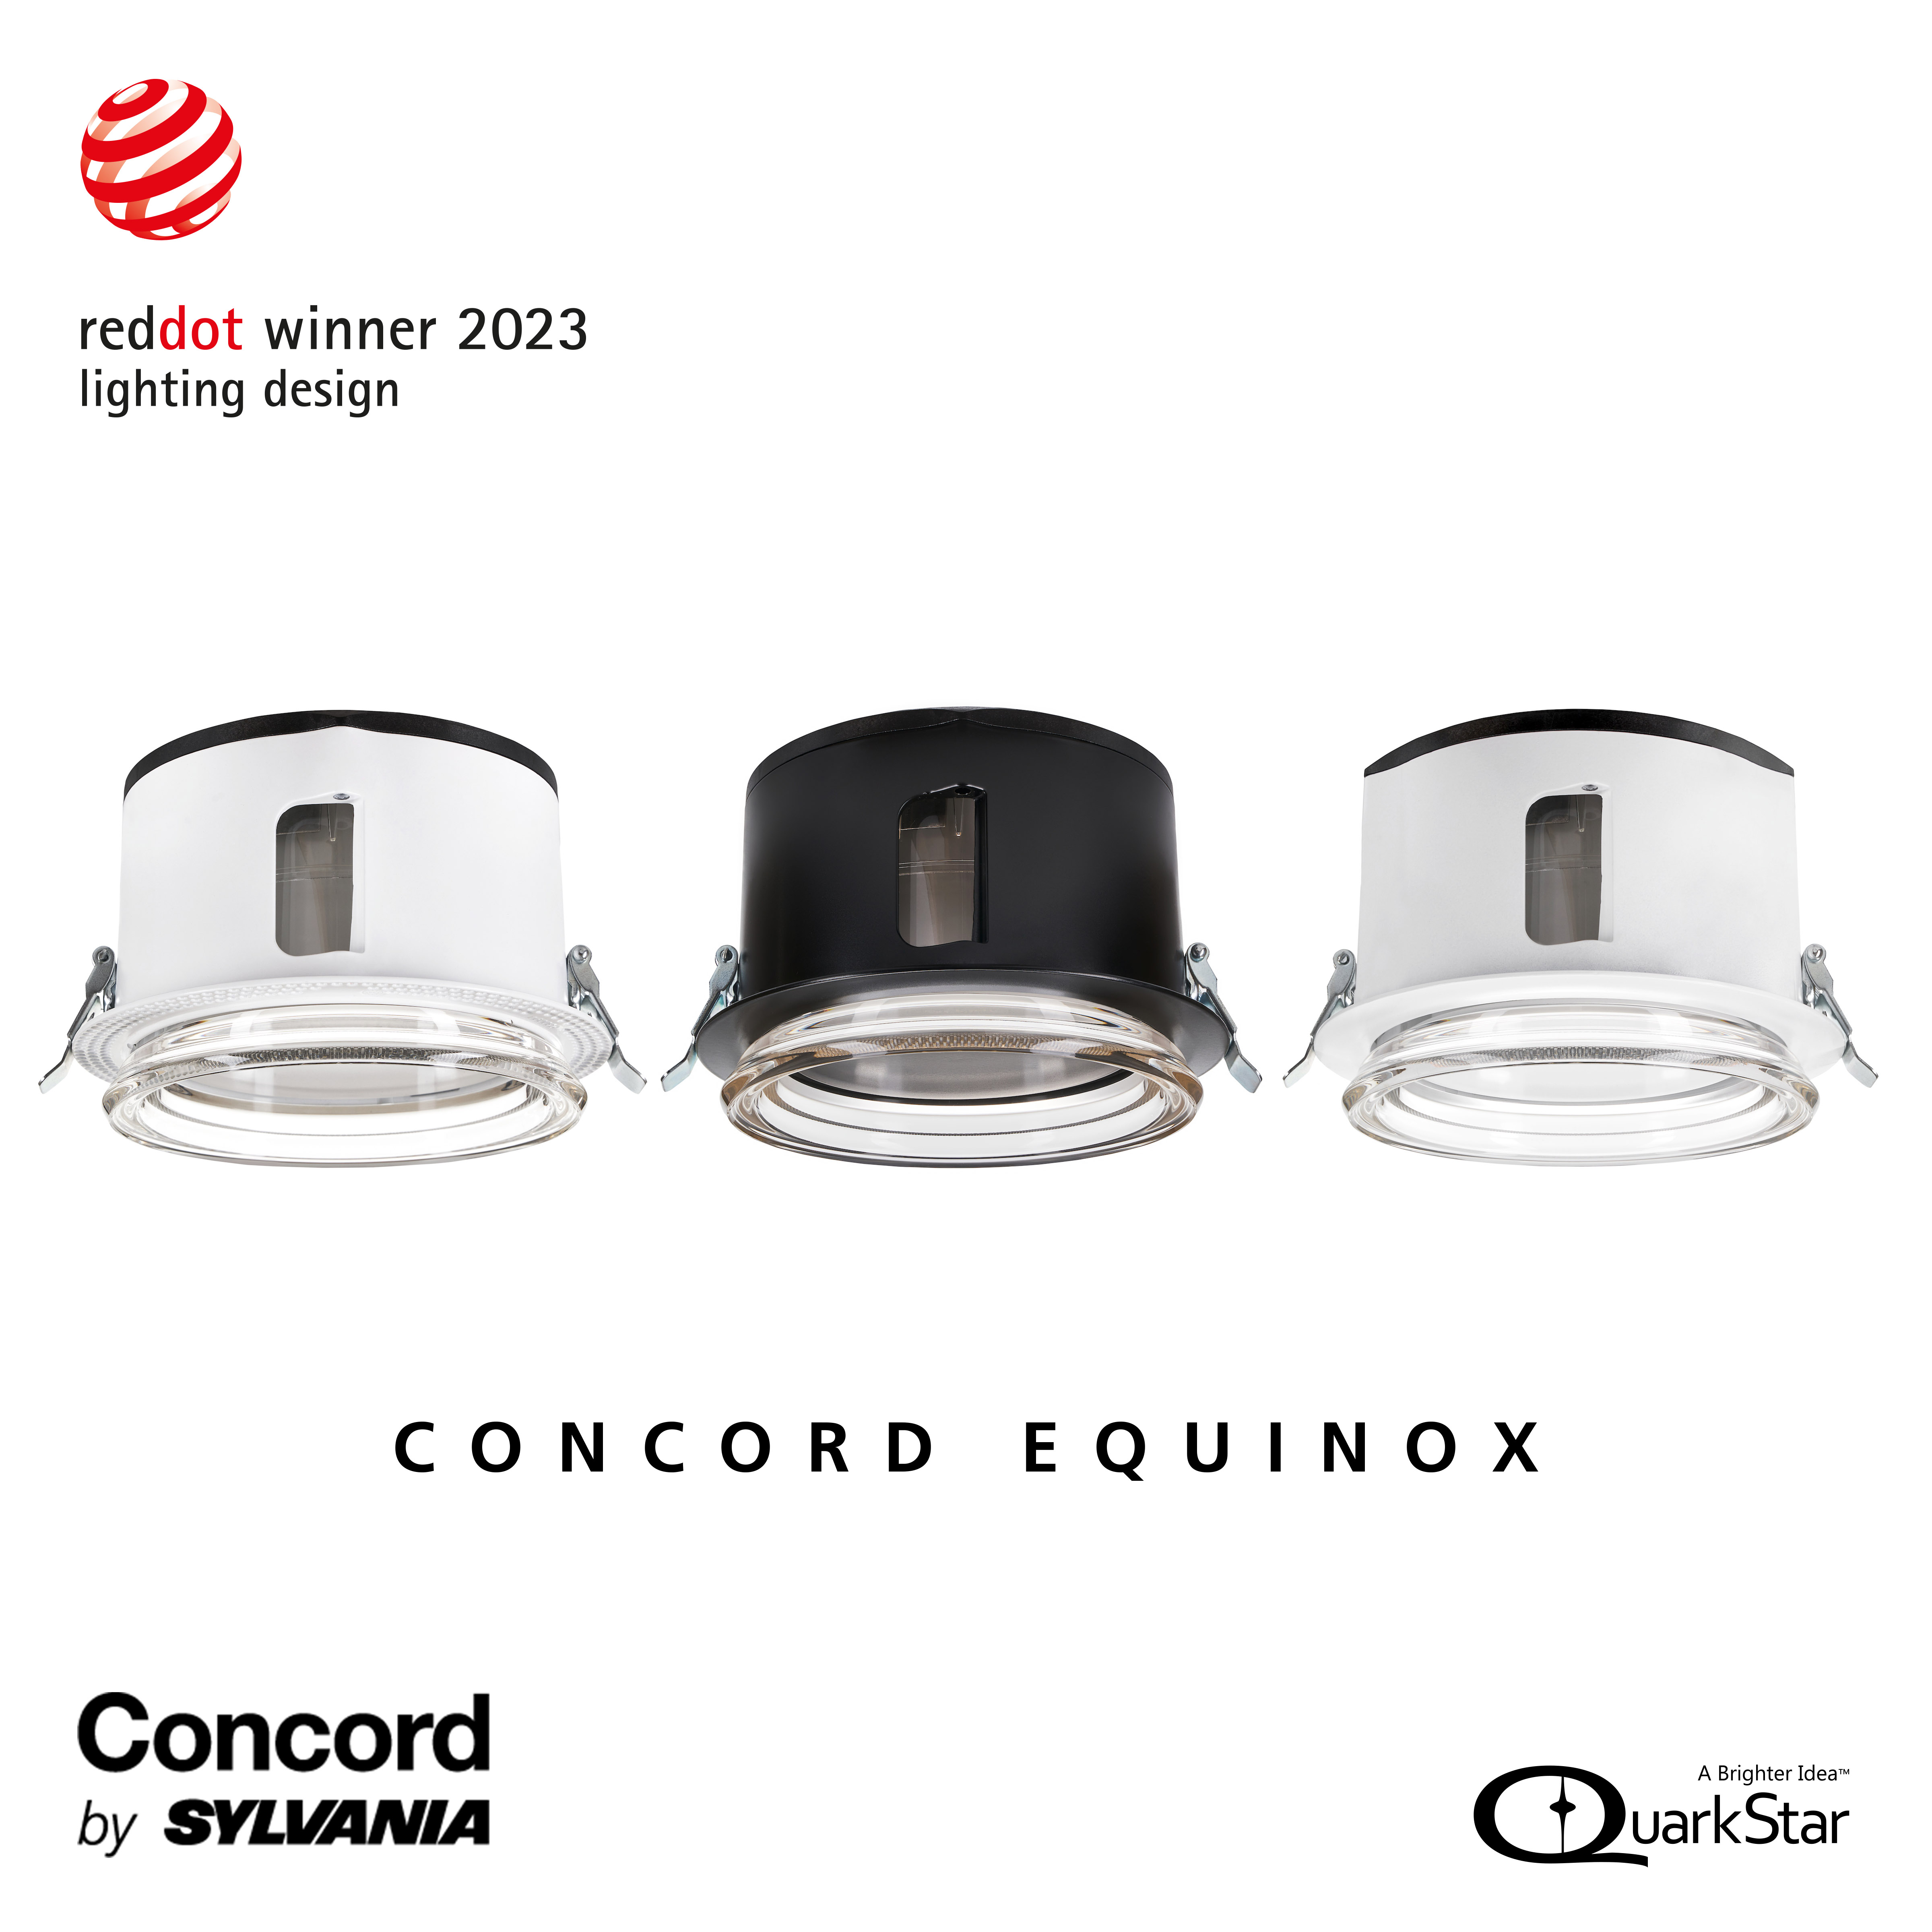 Concord Equinox With Red Dot & Concord TRIO